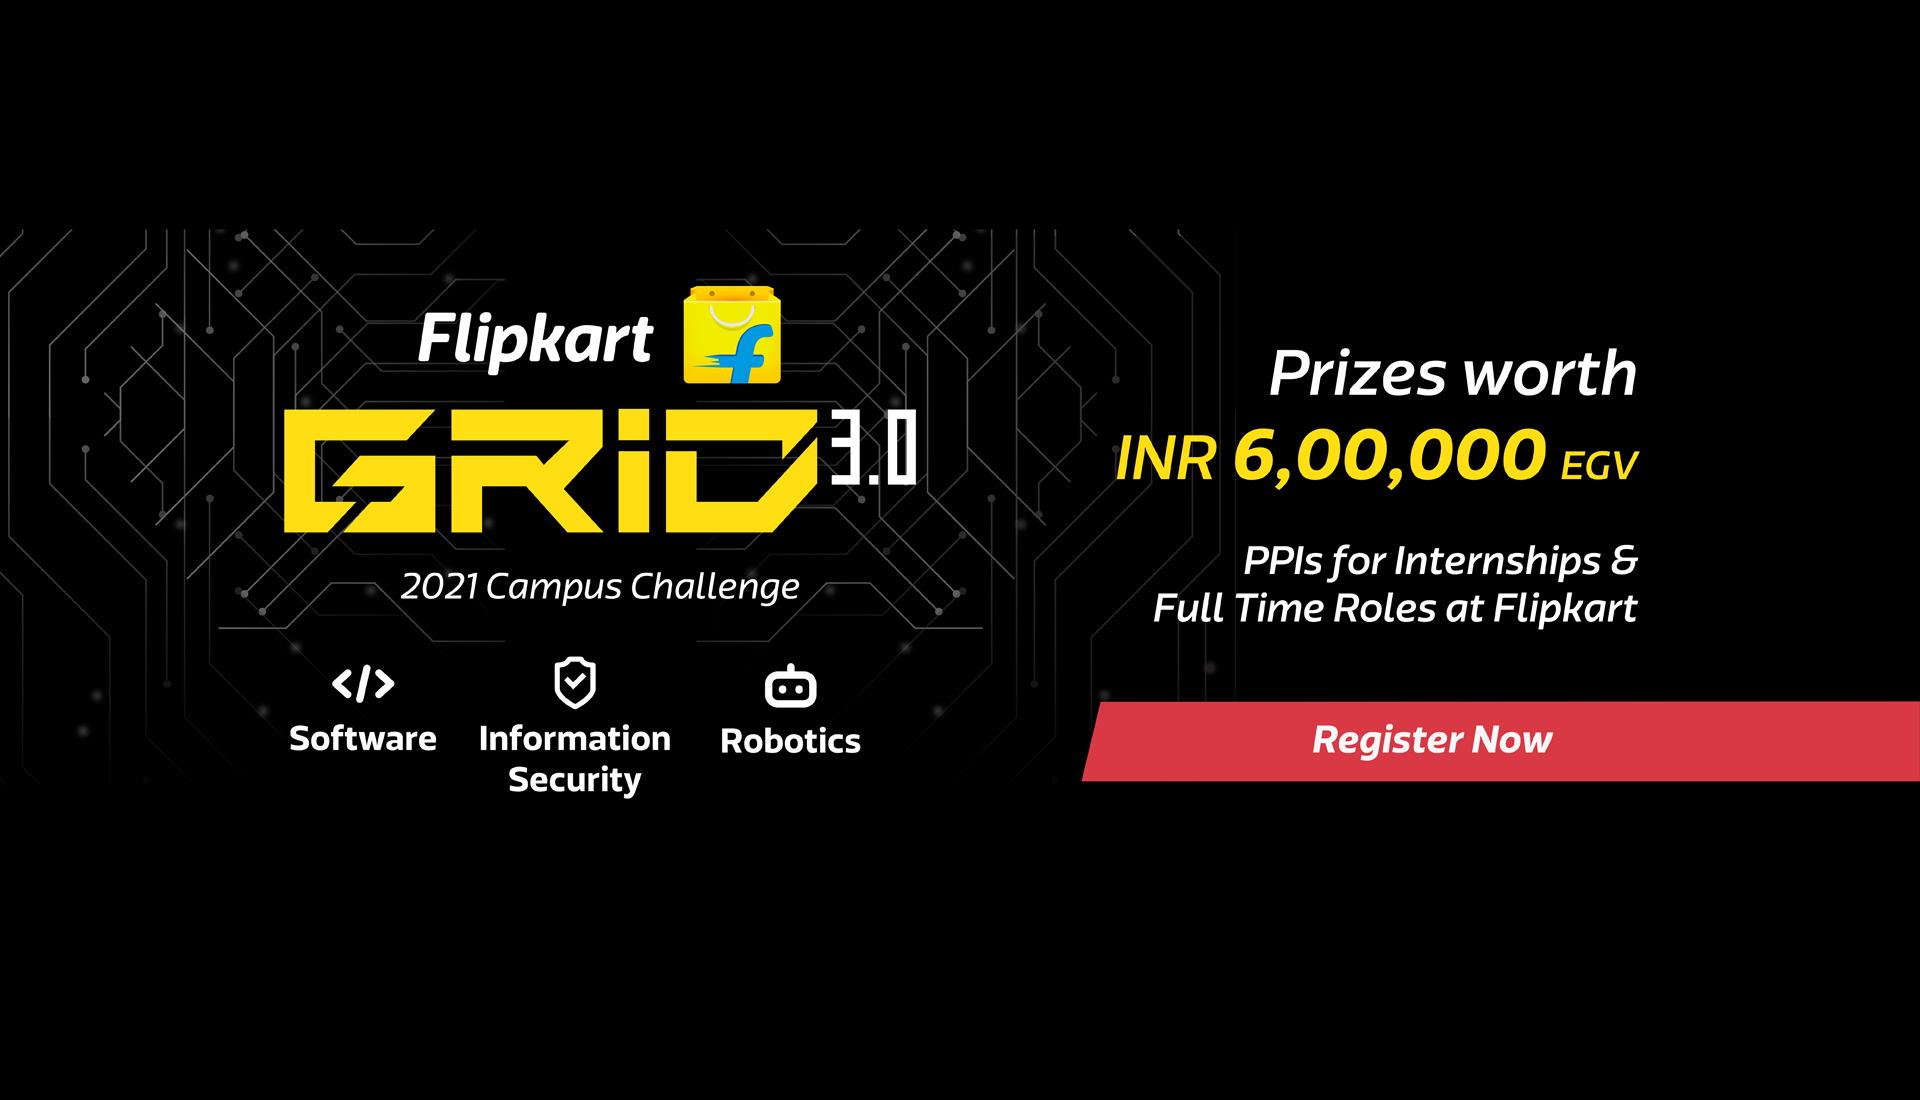 Flipkart’s Flagship Engineering Campus Challenge-2021 [GRID 3.0], Prizes Worth INR 6,00,000 EGV; Register by July 8th, 2021